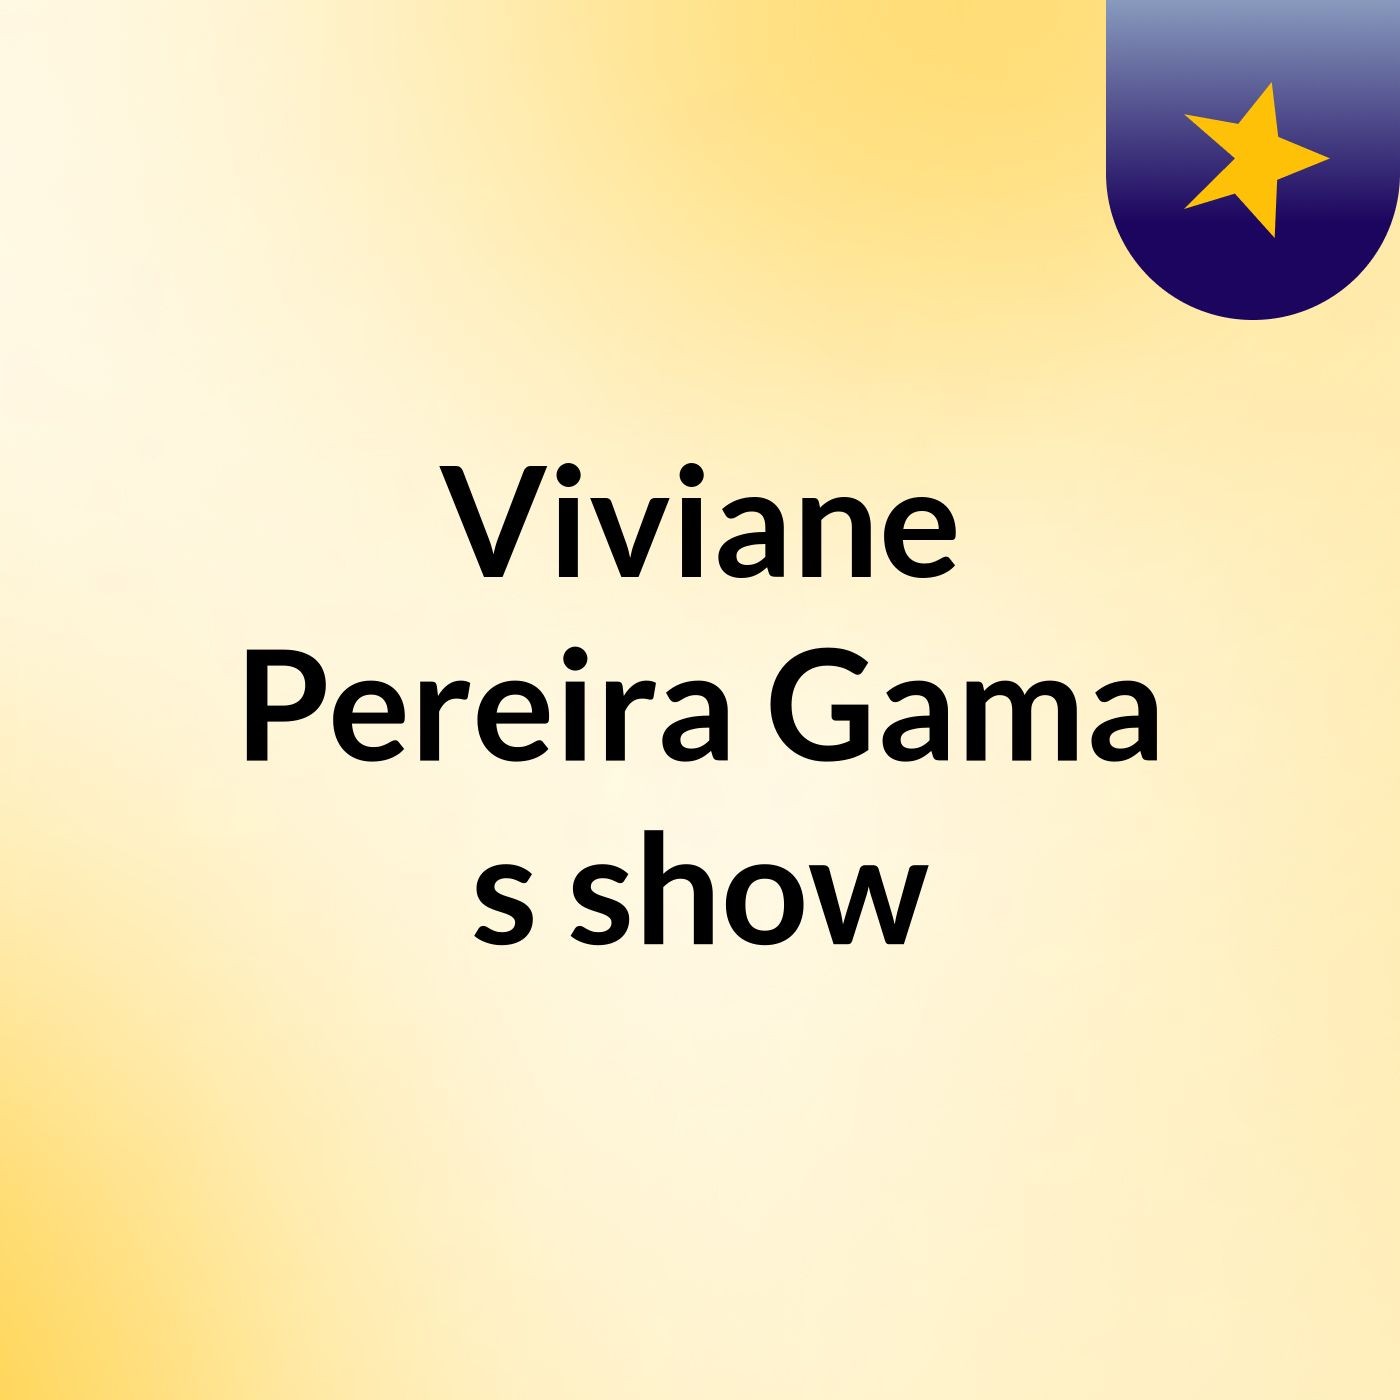 Viviane Pereira Gama's show